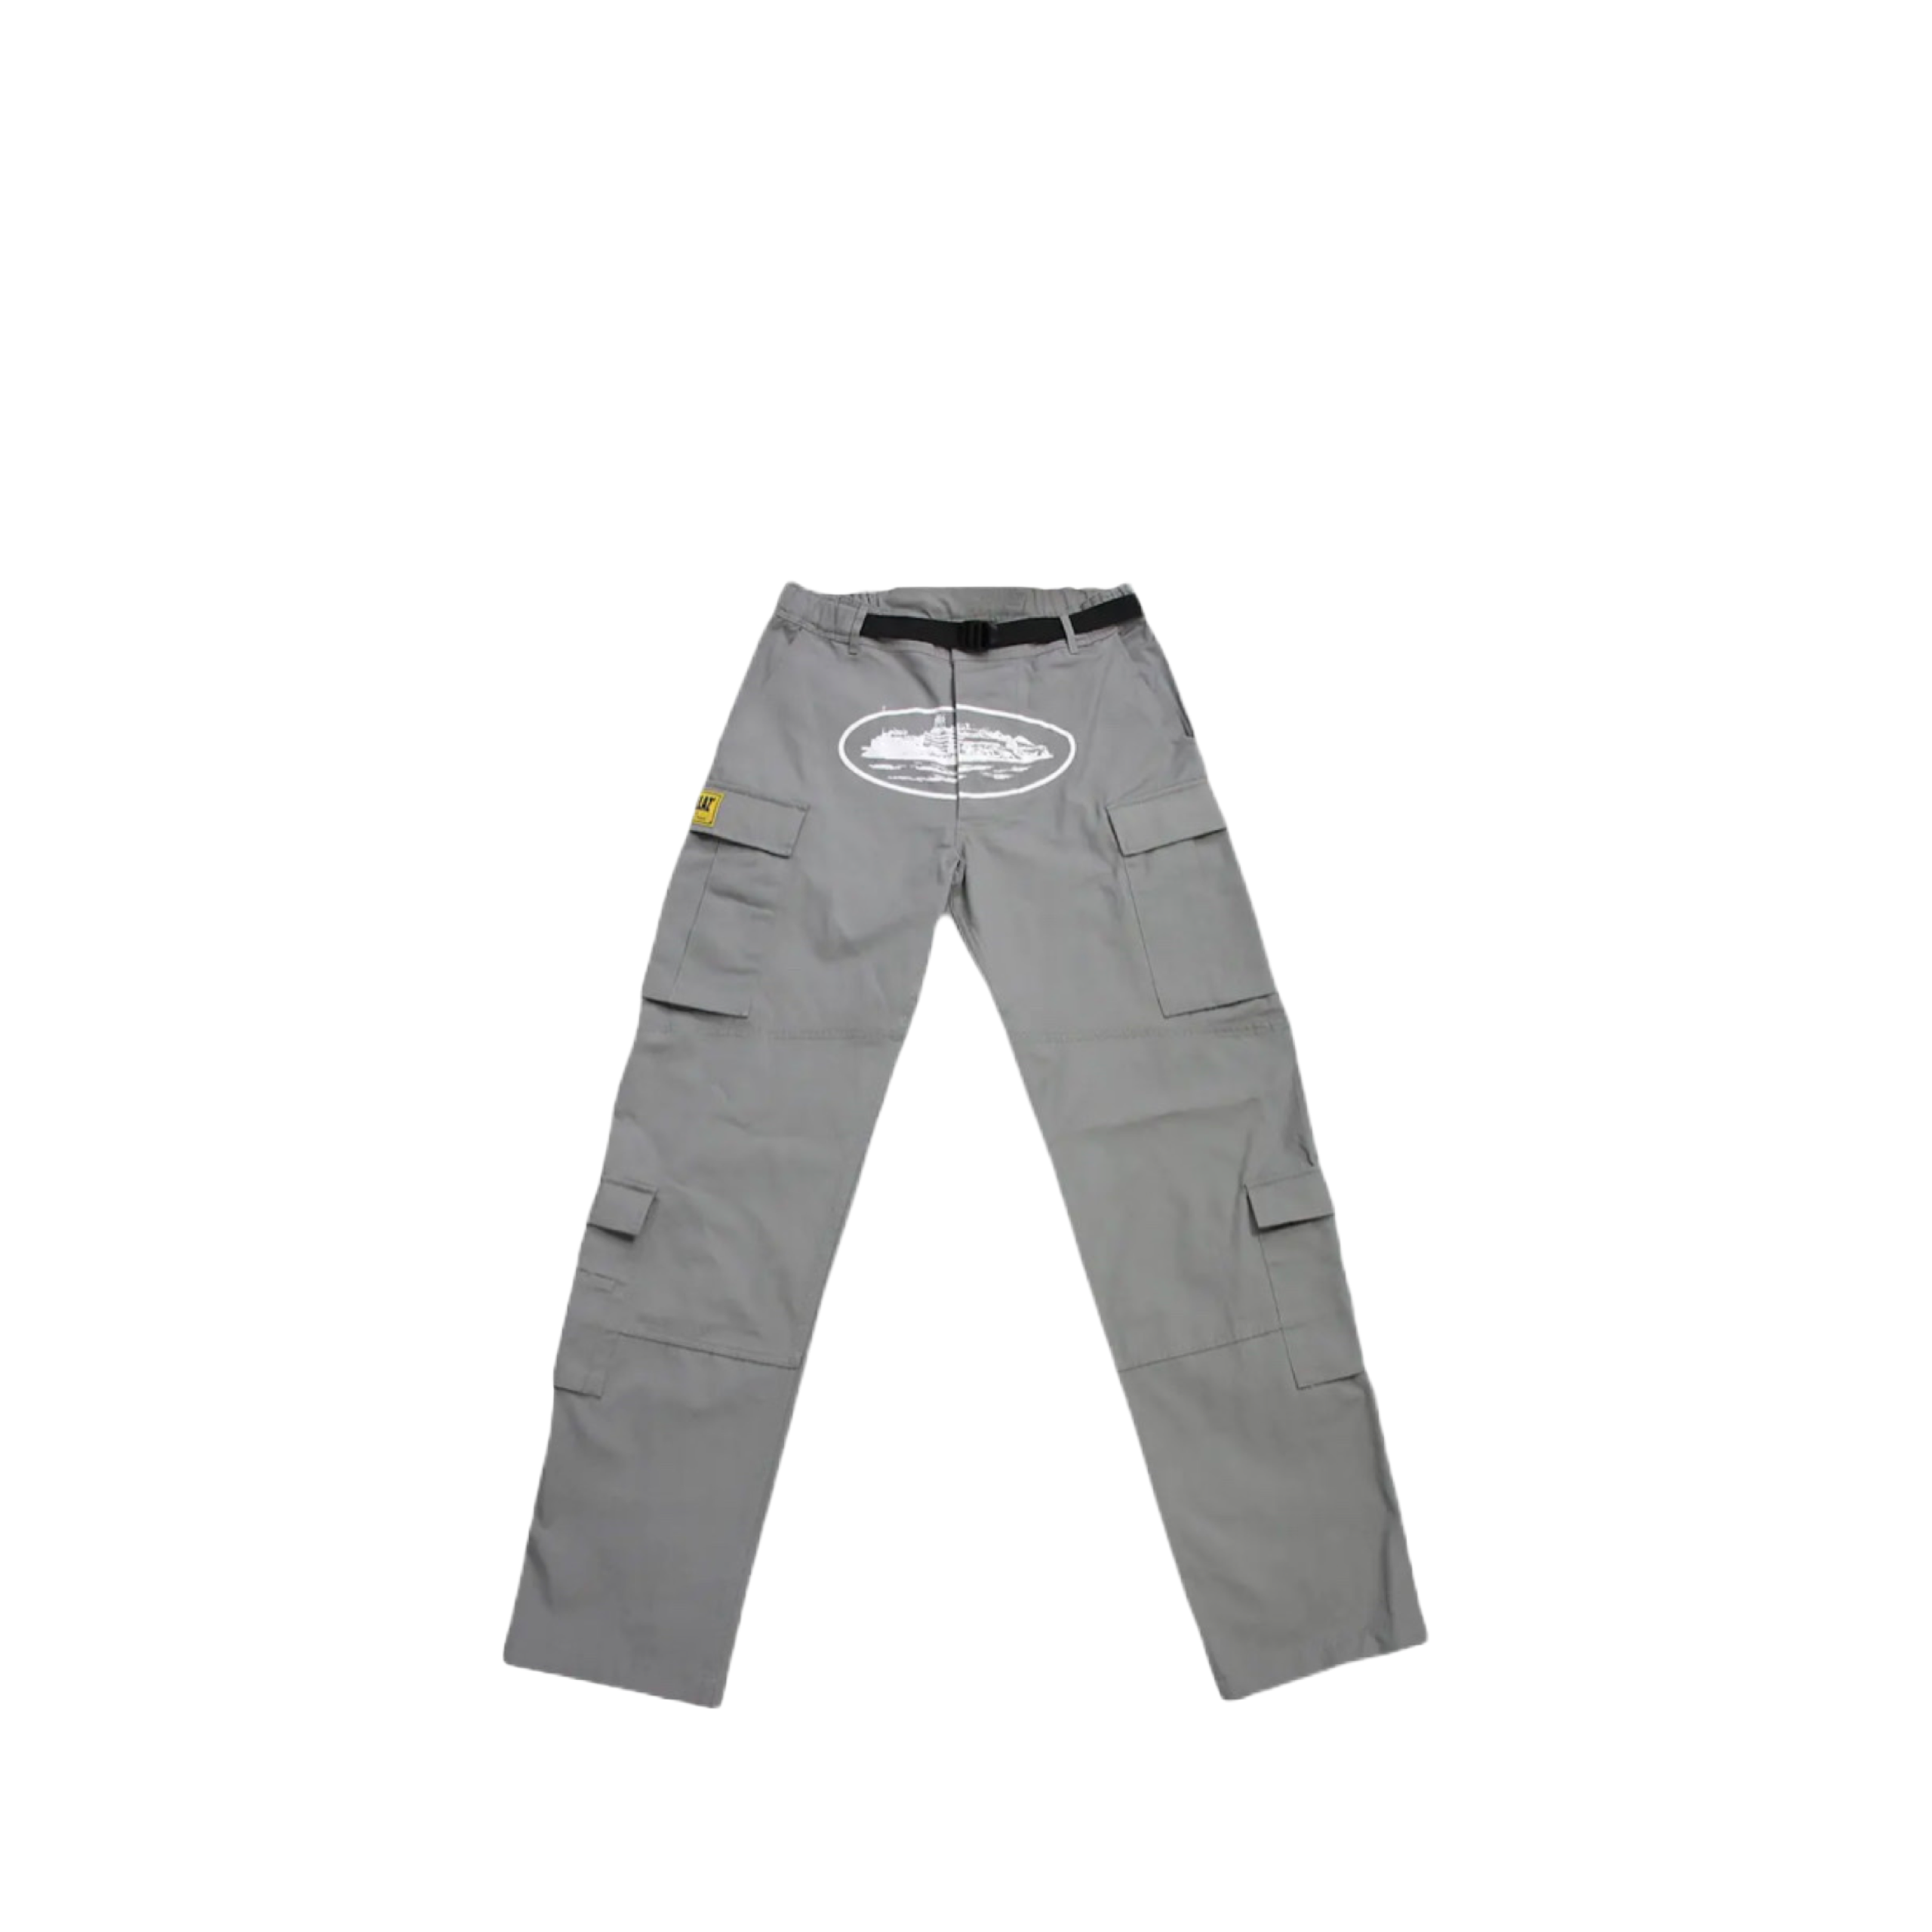 Corteiz Cargo Pants Men's Multi Pocket Black / Yellow Cargos Size Medium.